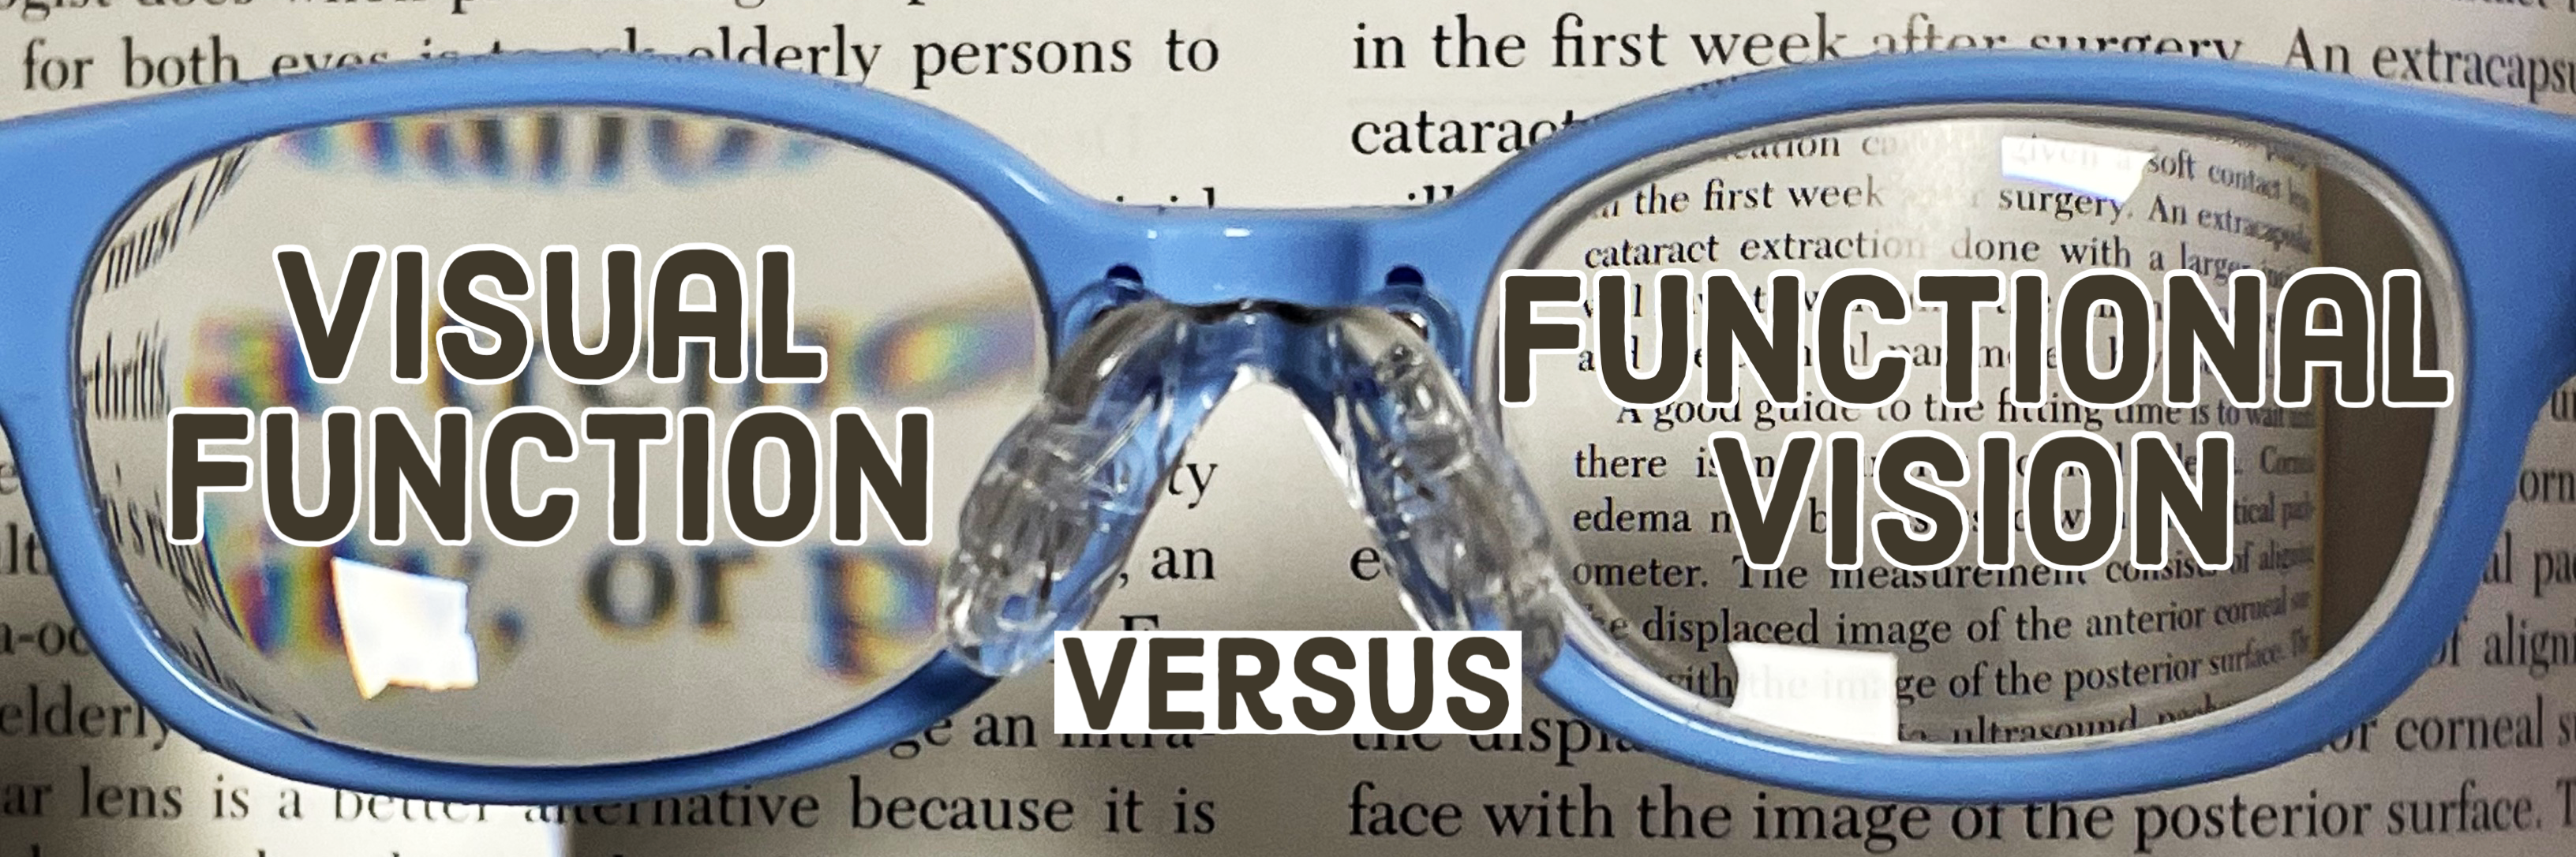 Visual Function Versus Functional Vision